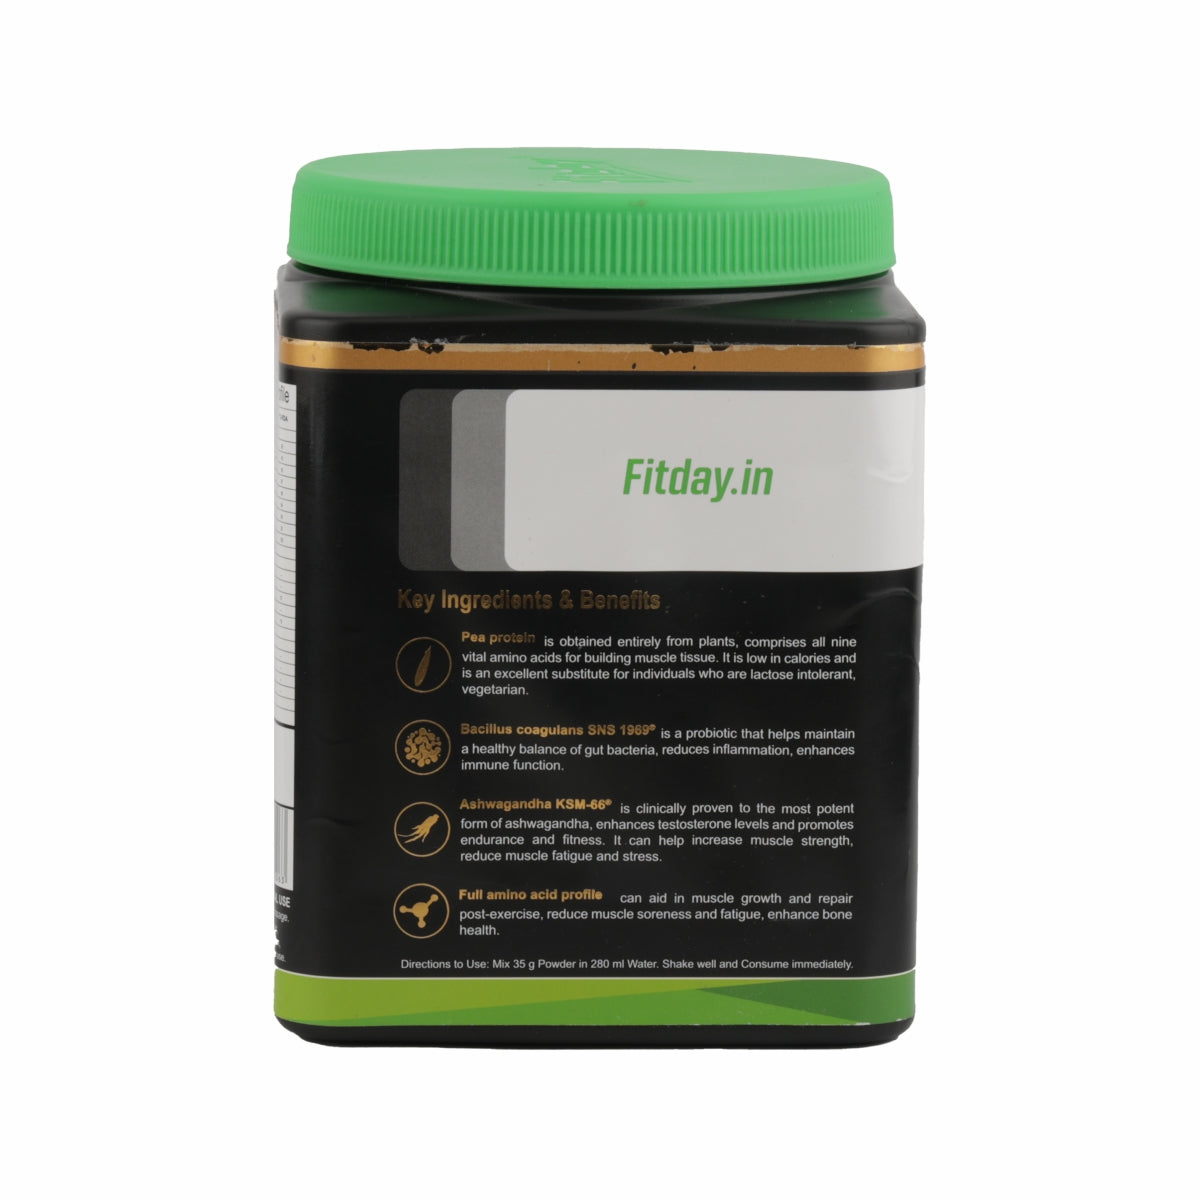 Fitday Plant Protein Sport - Café Mocha